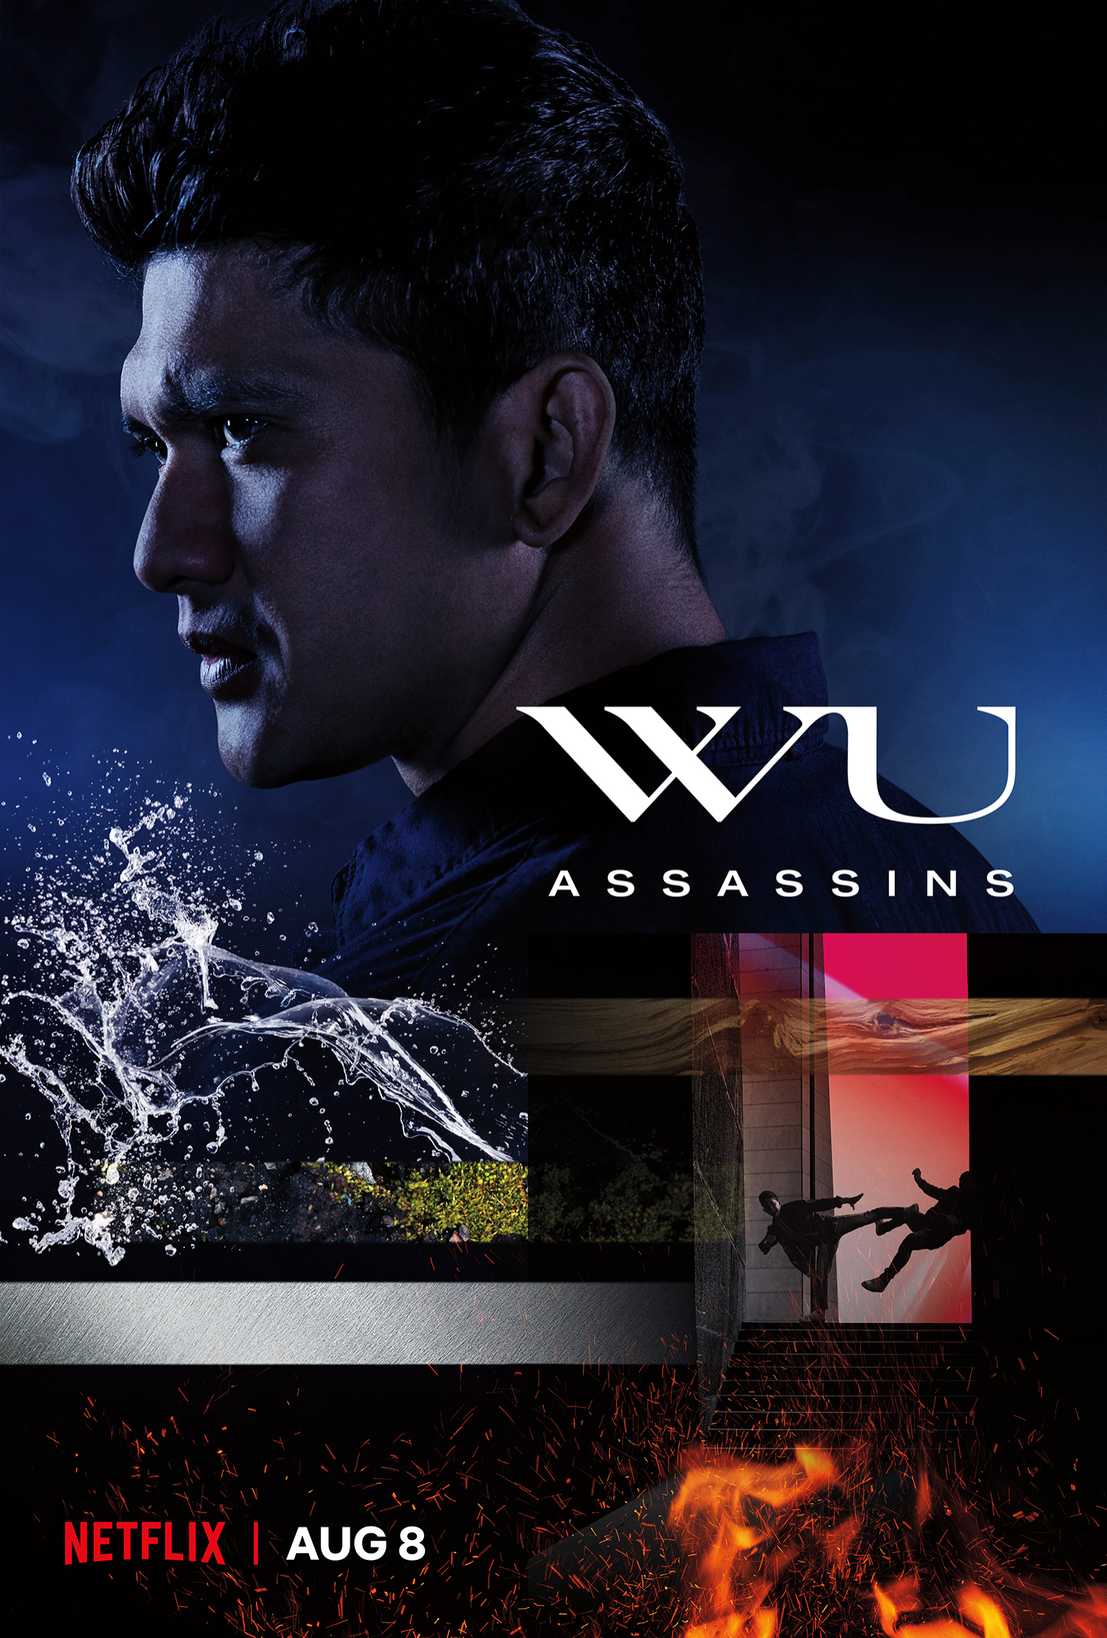 Wu Assassins Cover Image